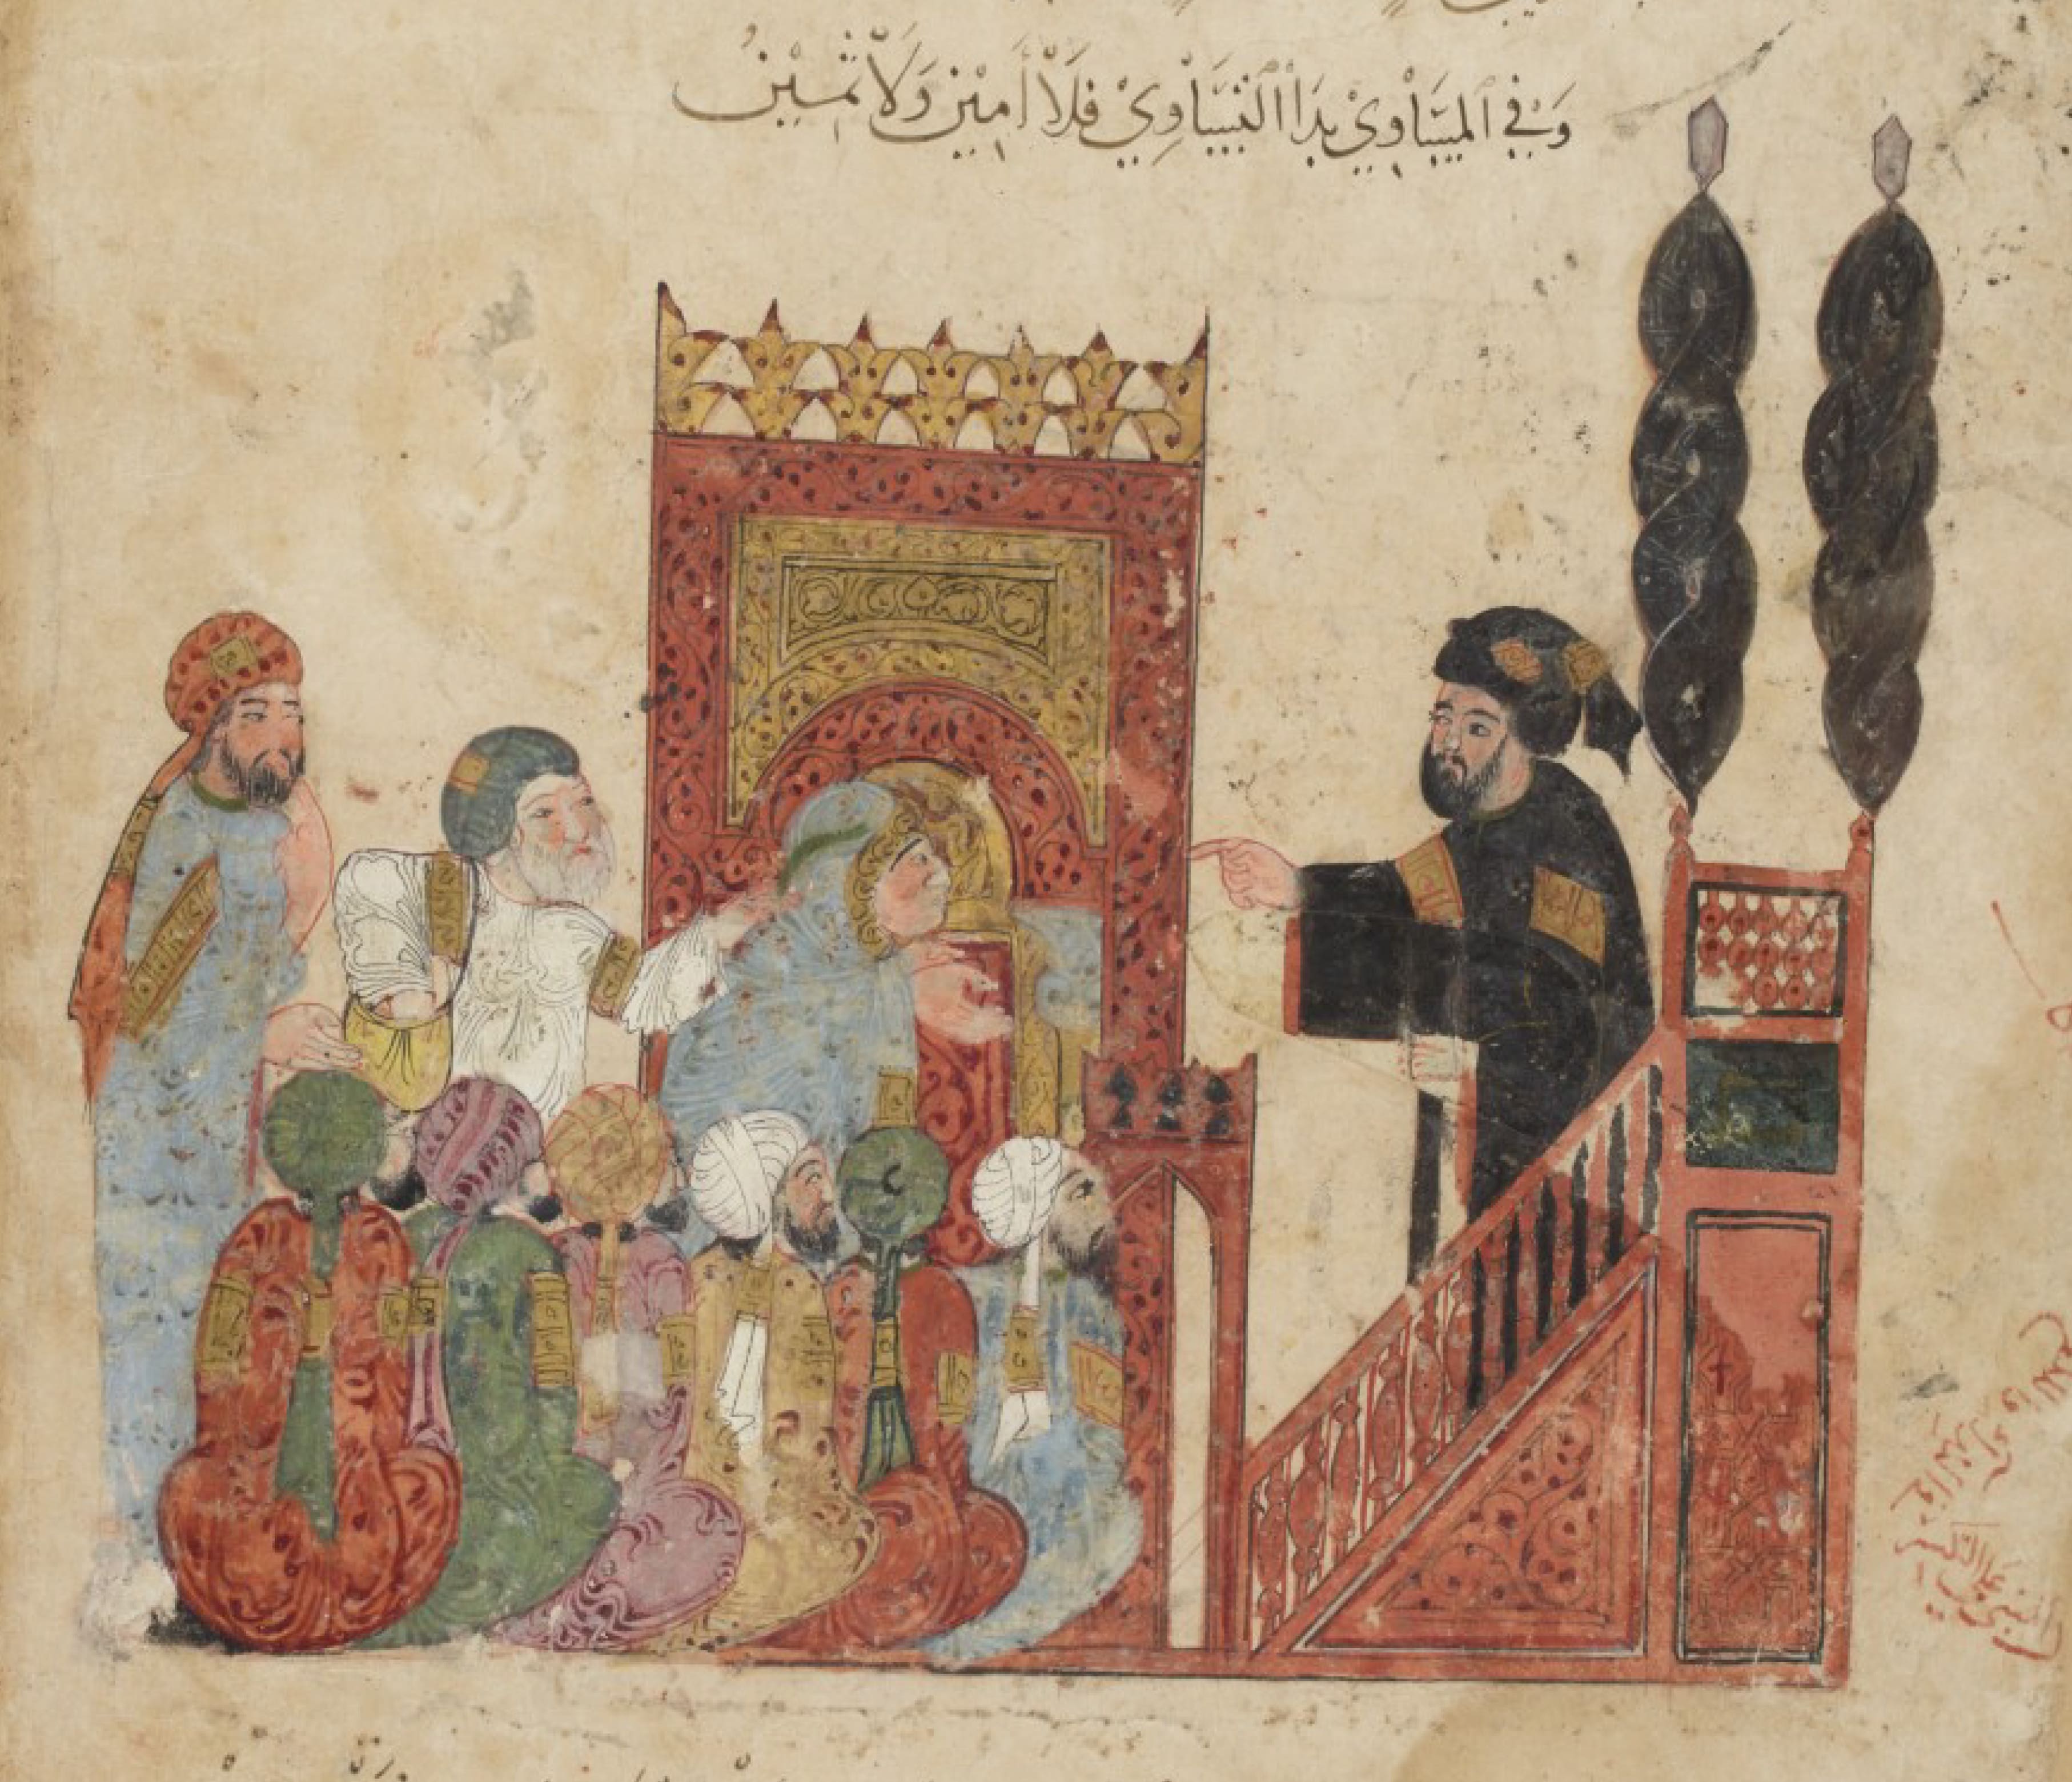 Sultan Seljoukide Berk-Yaruq ibn Malik-Shah de 1092-1104, miniature du 'Jami' al-Tawarikh 'de Rashid al-Din v. 1306-1311. Université d’Édinbourg